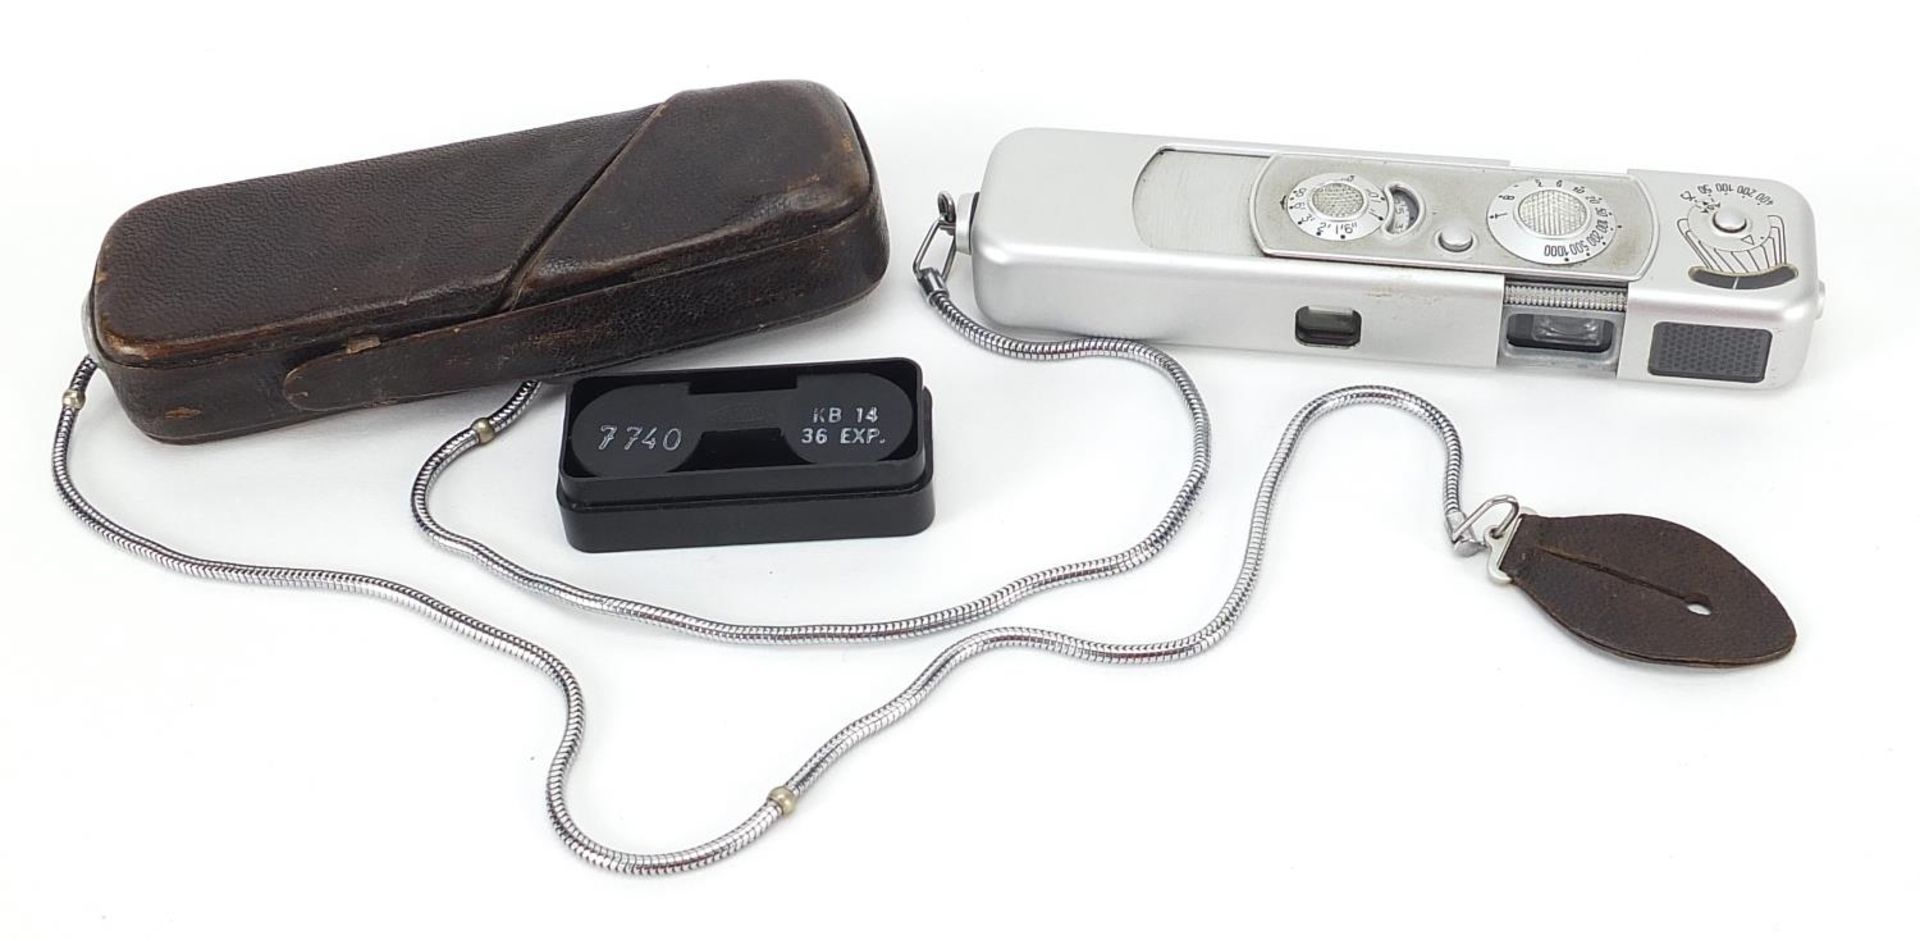 Minox spy camera with leather case